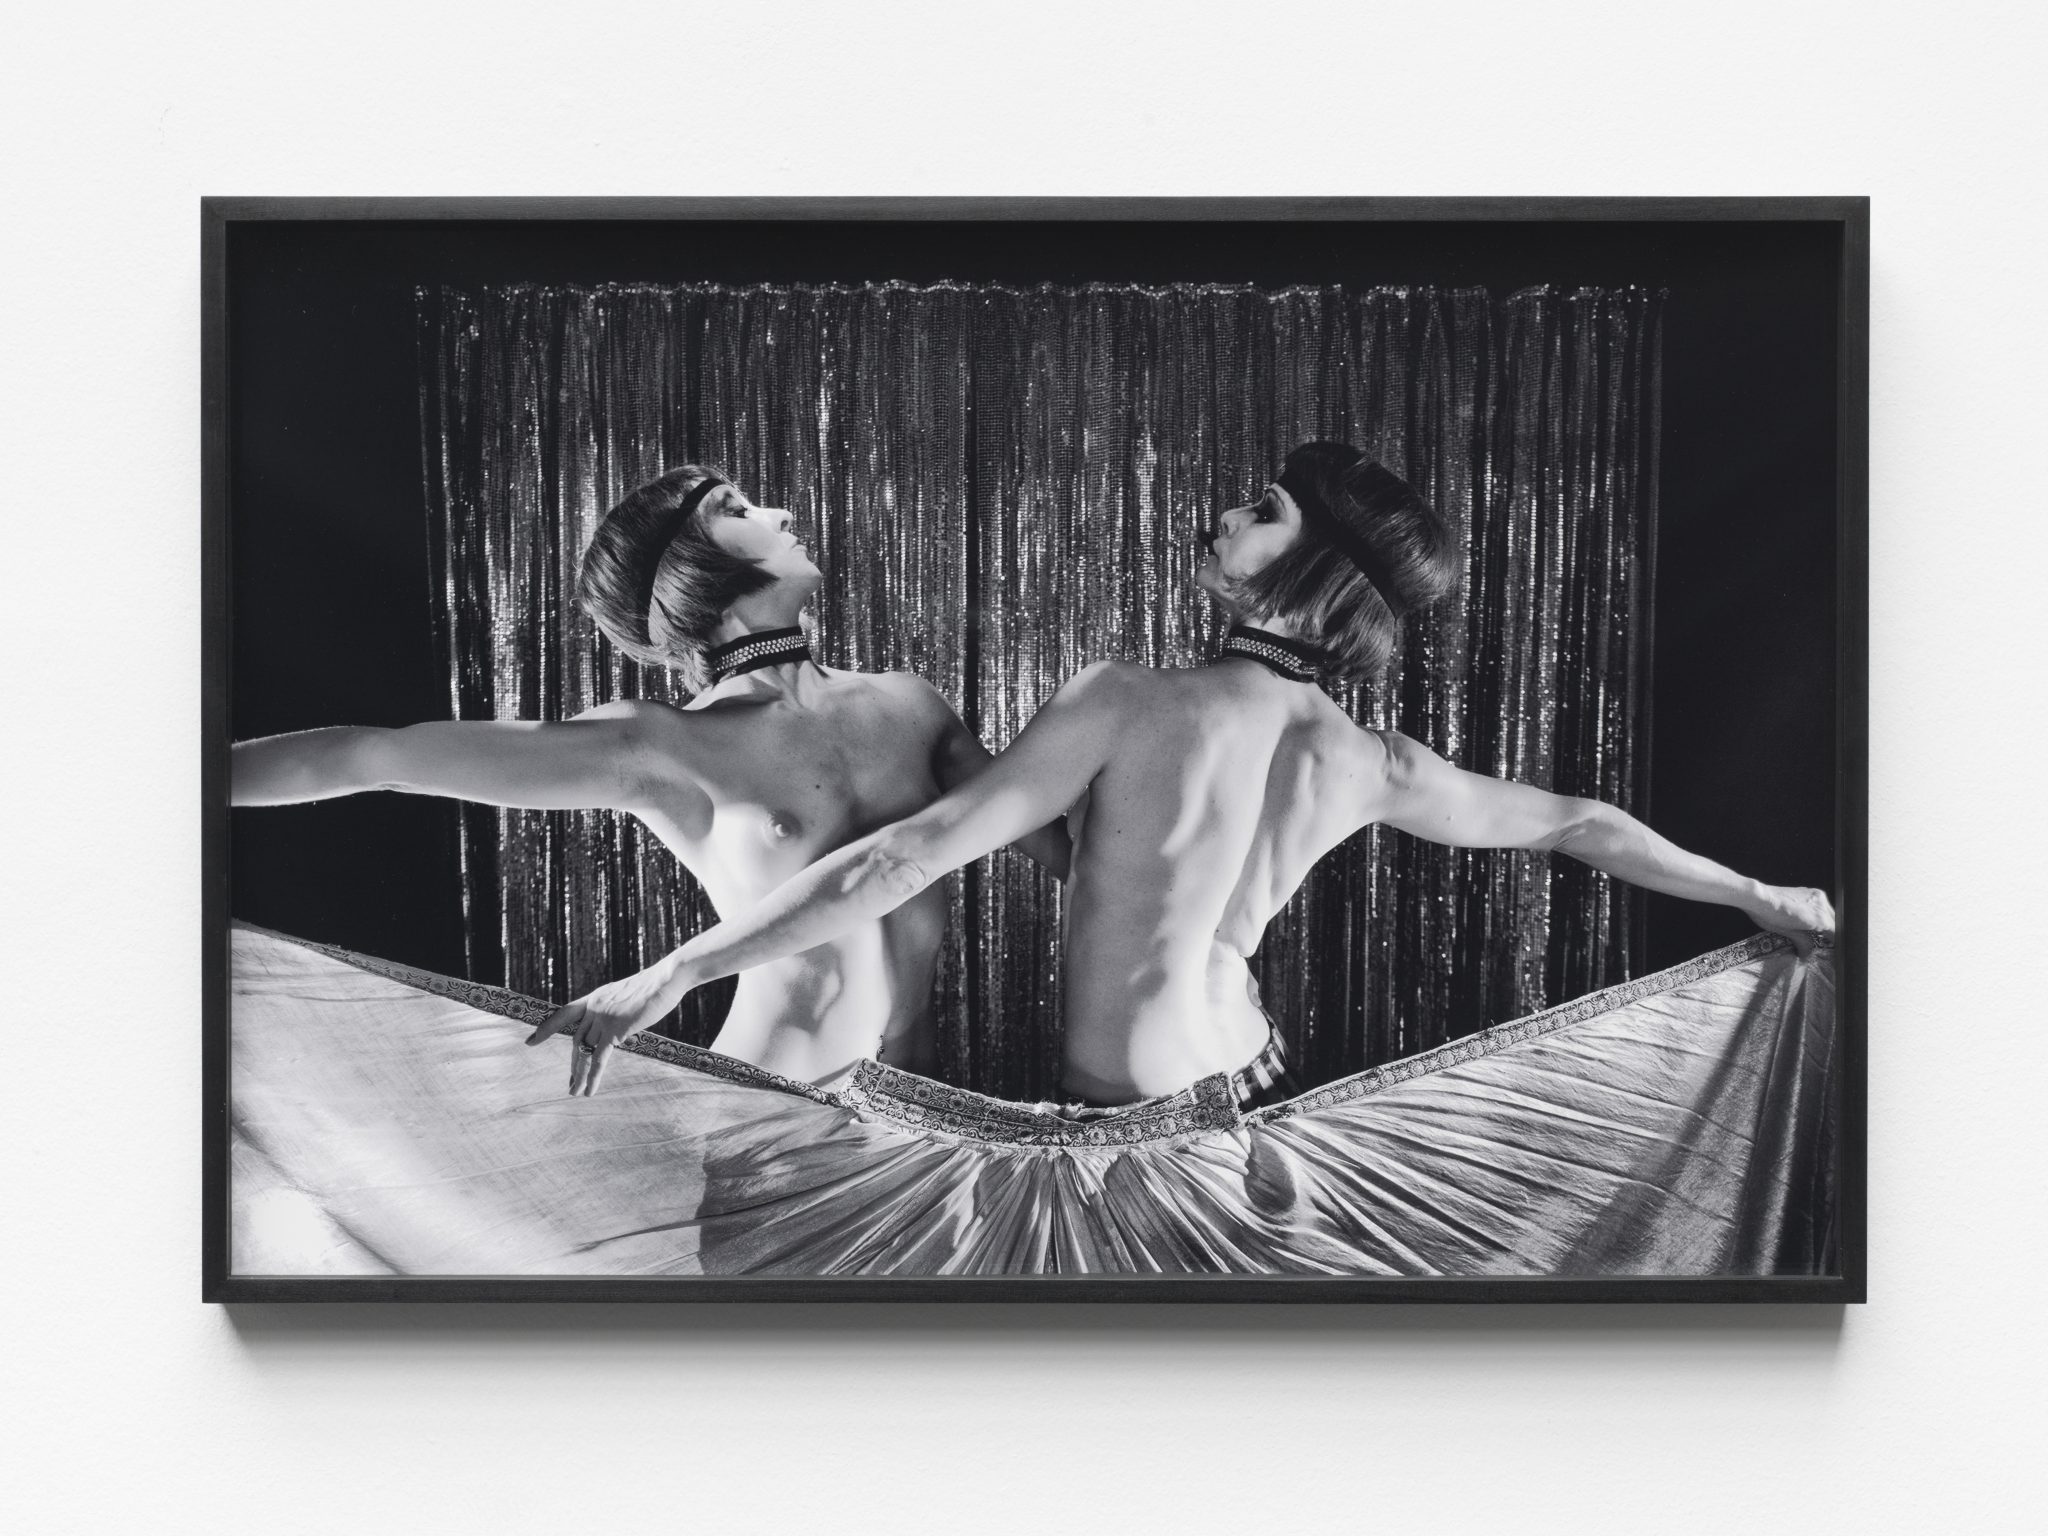 Julian Rosefeldt, Deep Gold, 2013/2017, black/white photograph, LightJet print, signed label on back and certificate, courtesy the Artist and KÖNIG GALERIE FAD Magazine